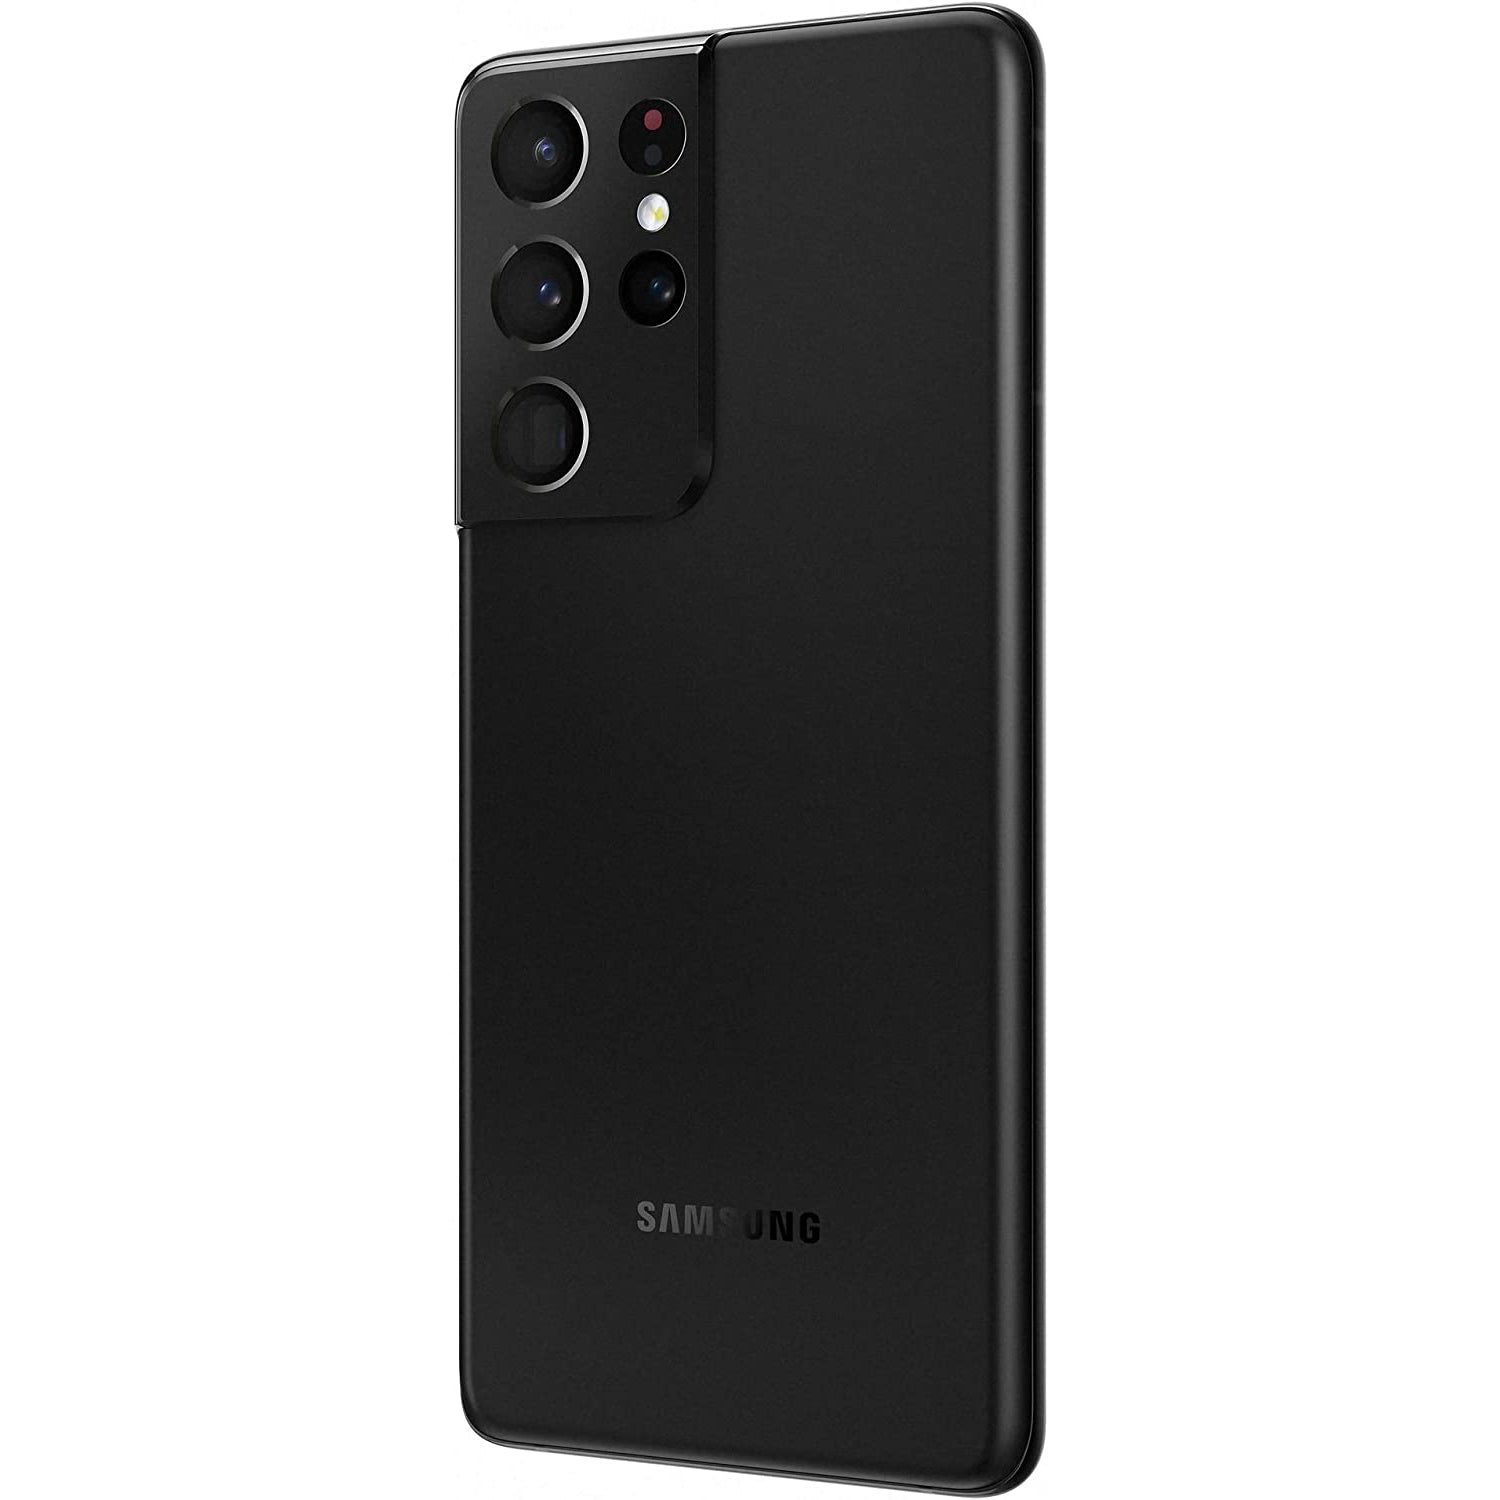 Samsung Galaxy S21 Ultra 5G 512GB Phantom Black Unlocked - Good Condition